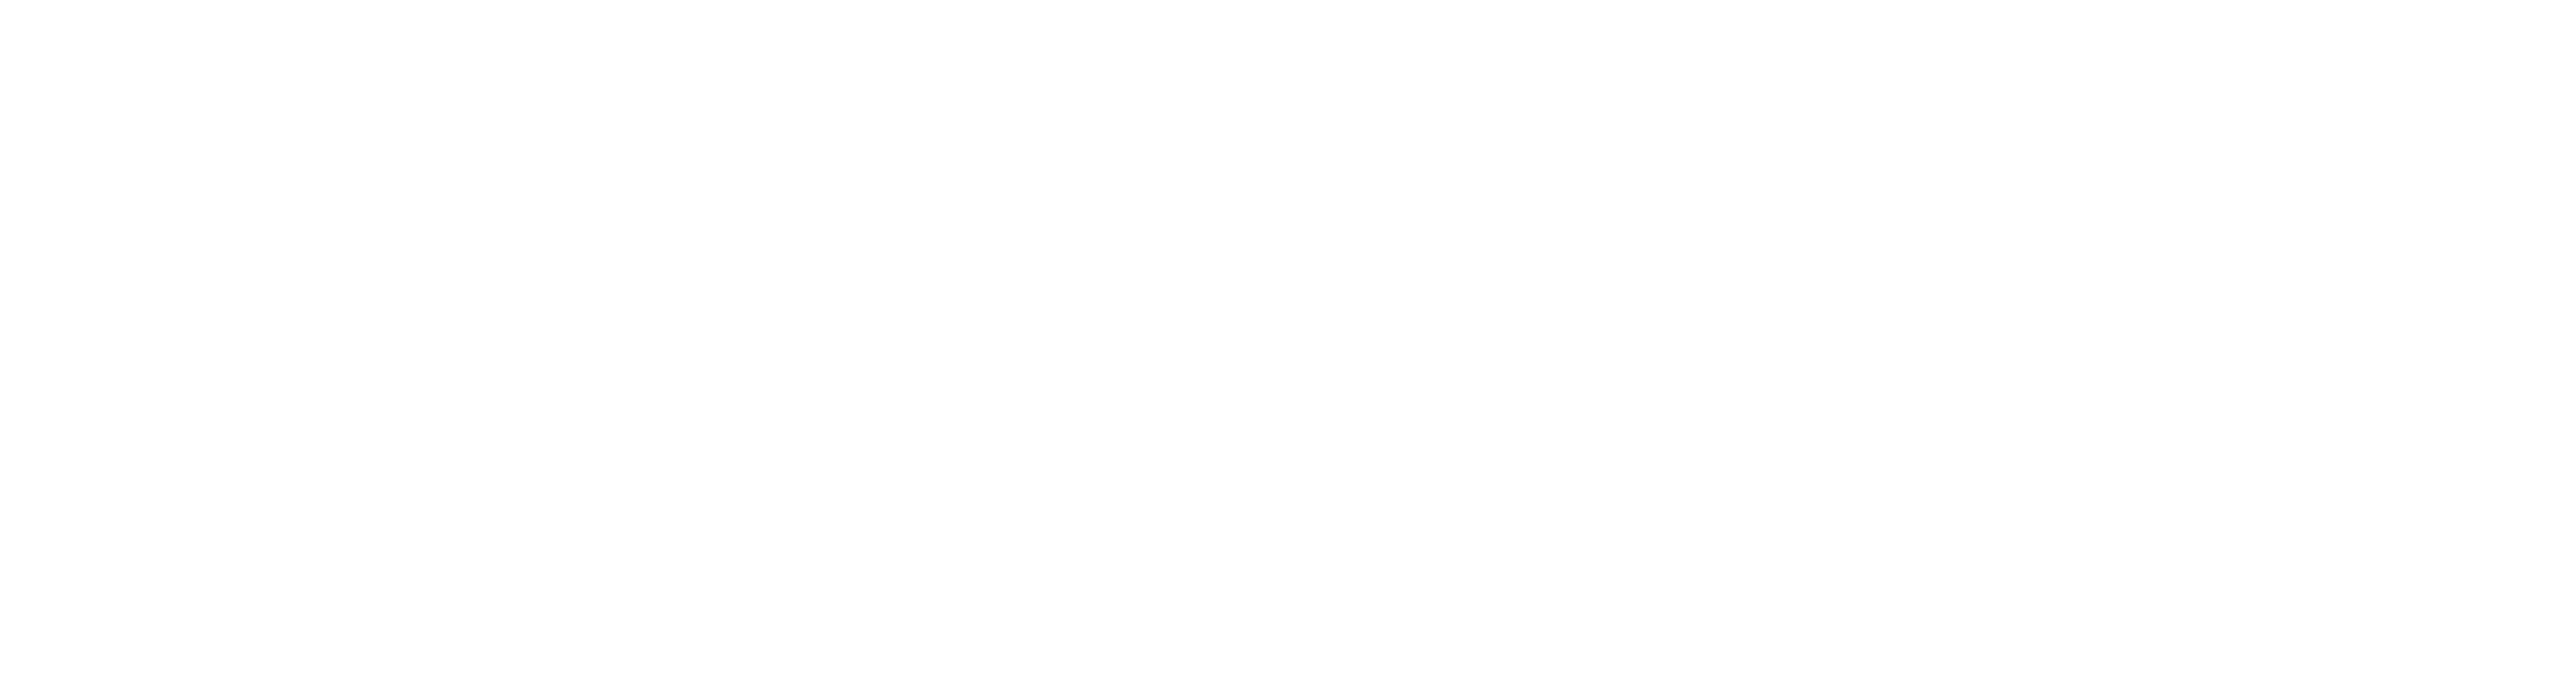 10K Humans Logo